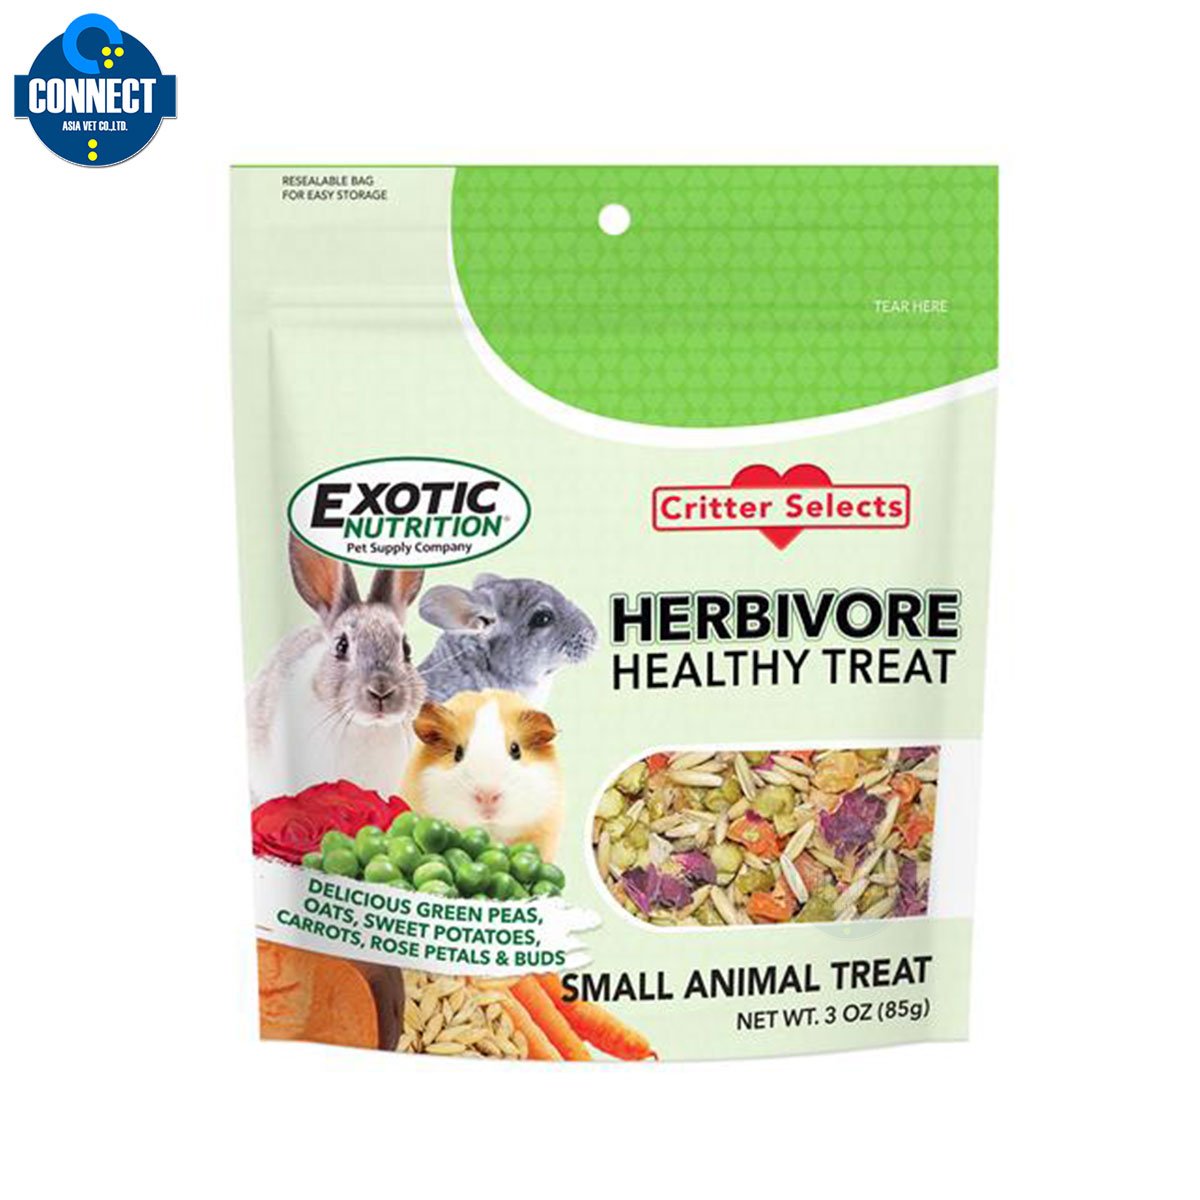 Exotic Nutrition - HERBIVORE HEALTHY TREAT 85 กรัม. เฮอร์บิวอร์ เฮลท์ตี้ ทรีส อาหารสำหรับ สัตว์กินพืช 85 กรัม.